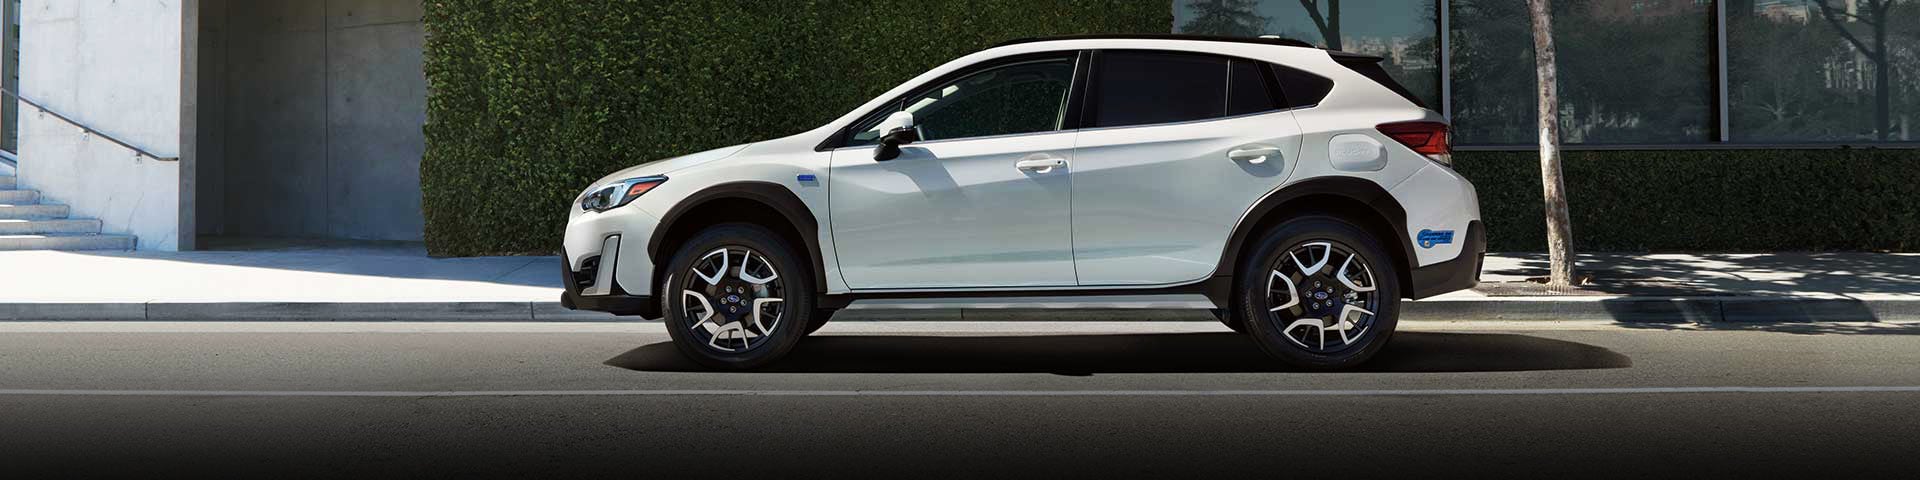 The side profile of a white Subaru Crosstrek Hybrid | Subaru World of Newton in Newton NJ